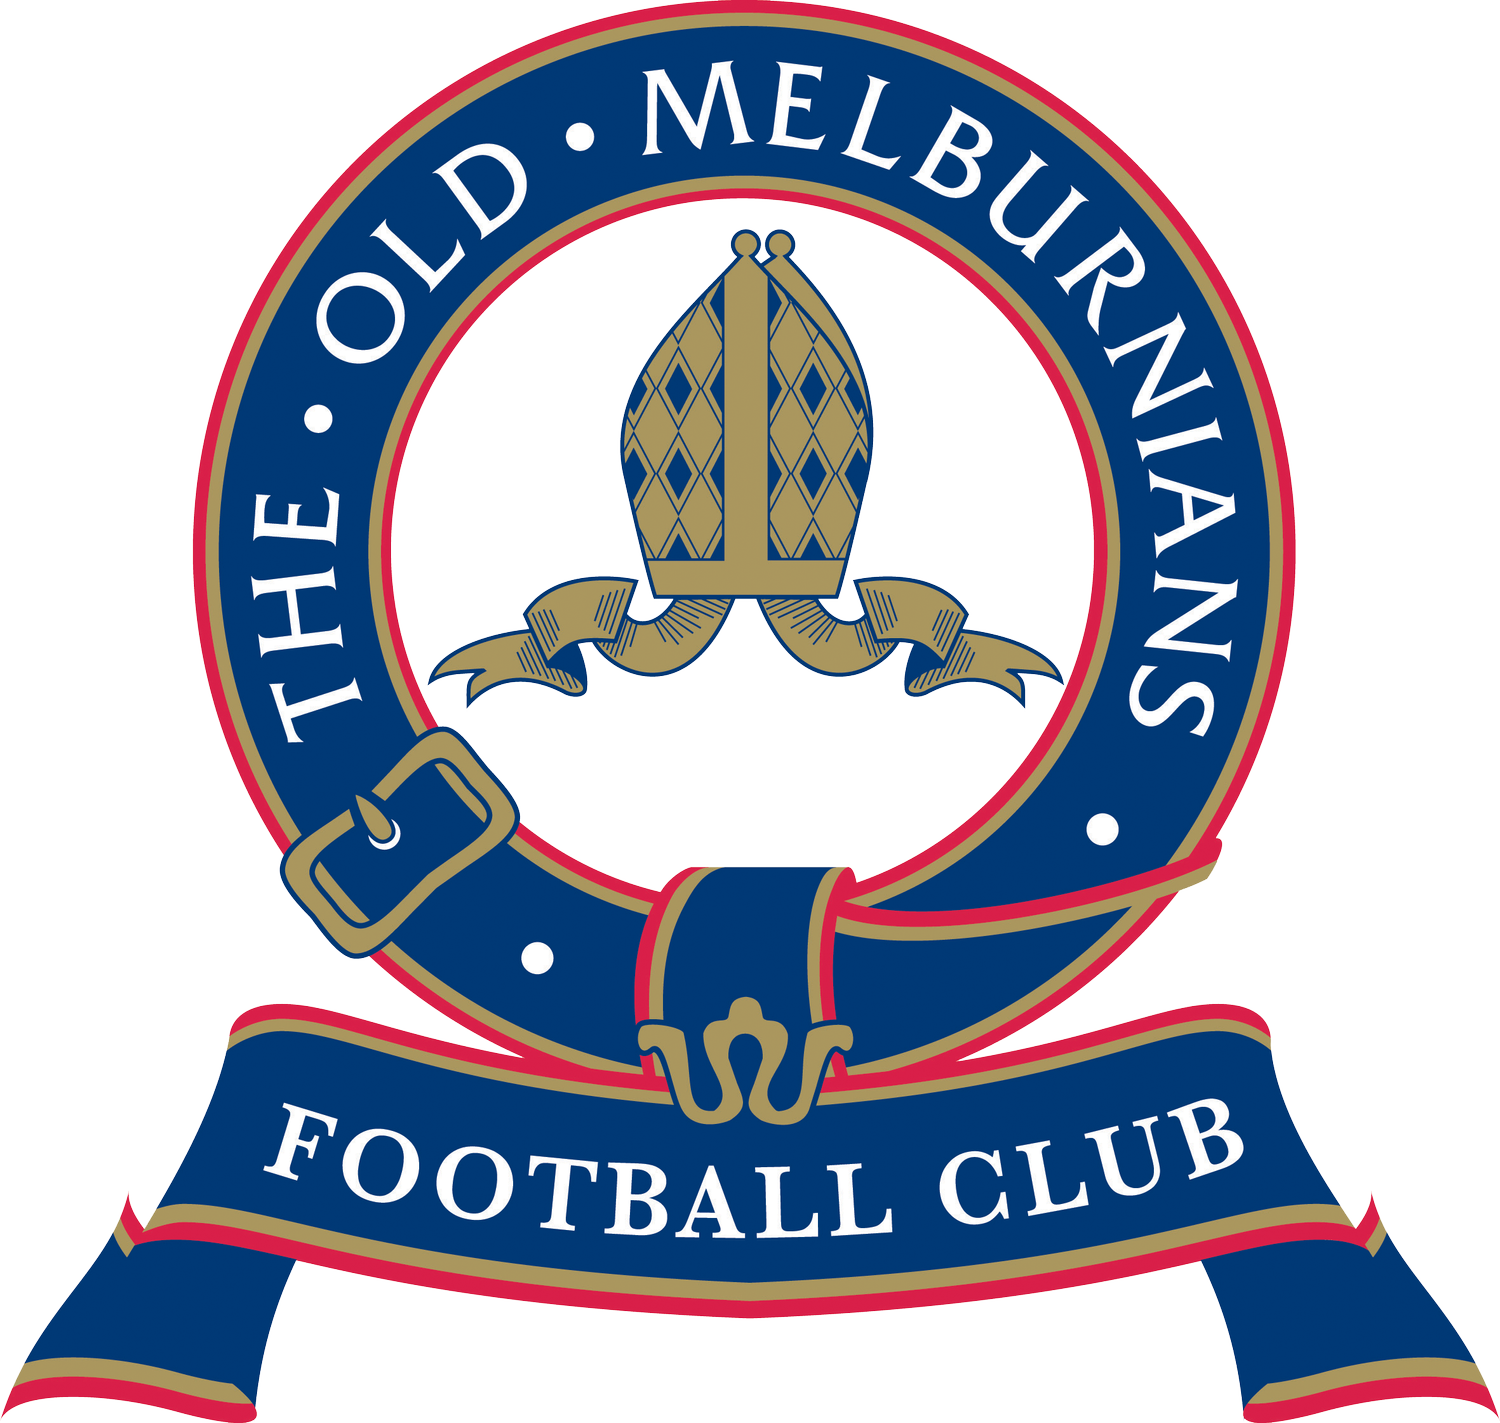 The Old Melburnians Football Club